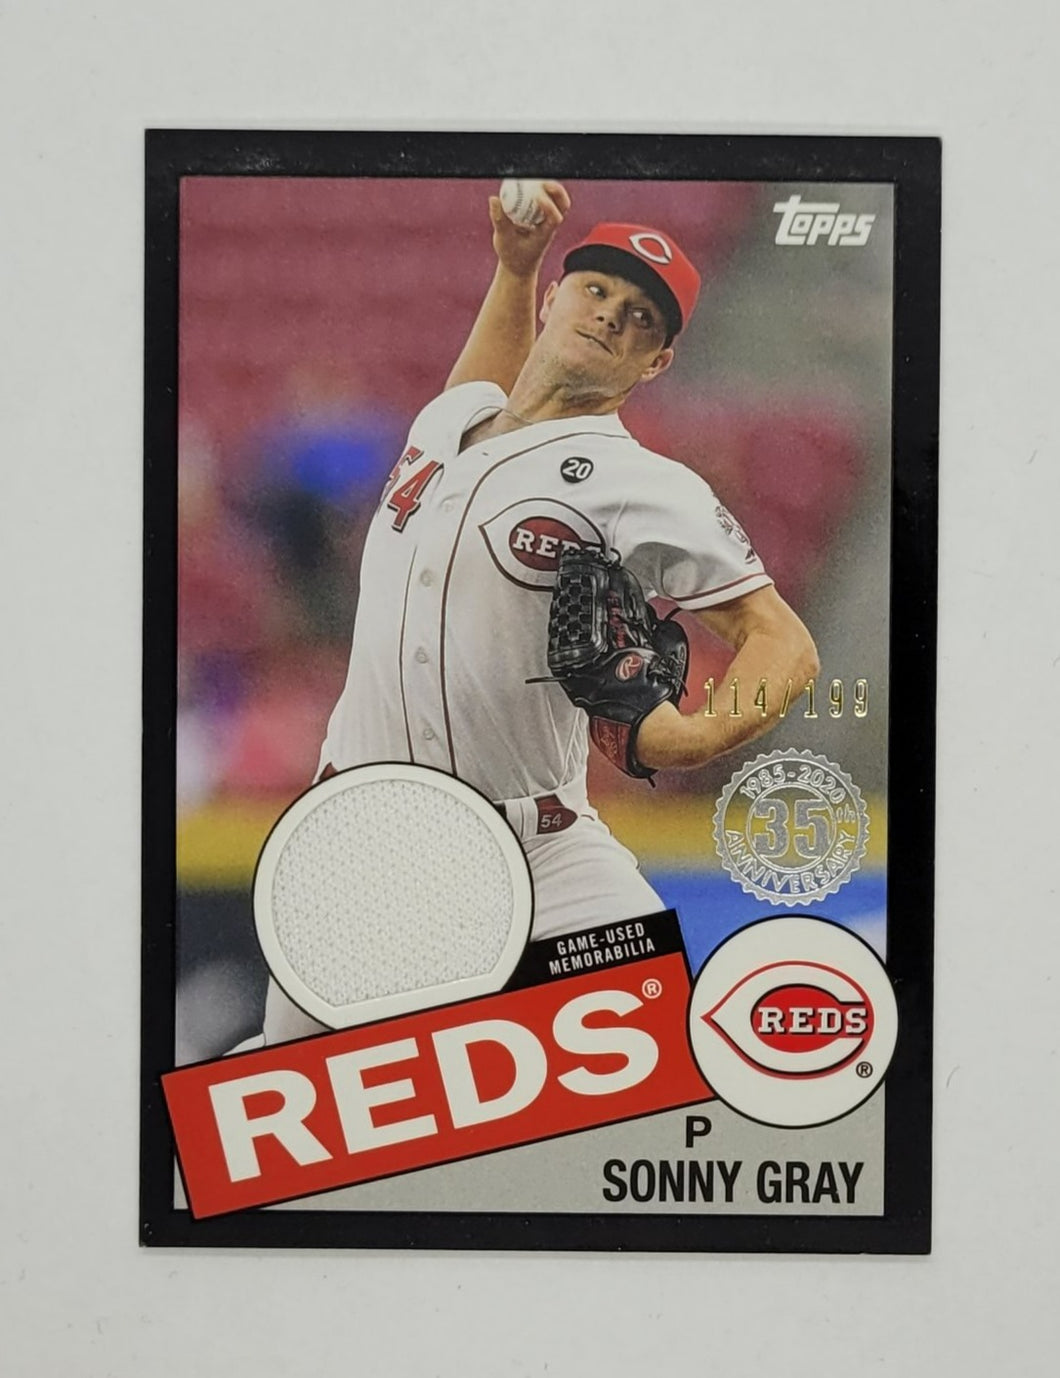 2020 Topps Series 1 Sonny Grapy Black Relic Baseball Card 114/199